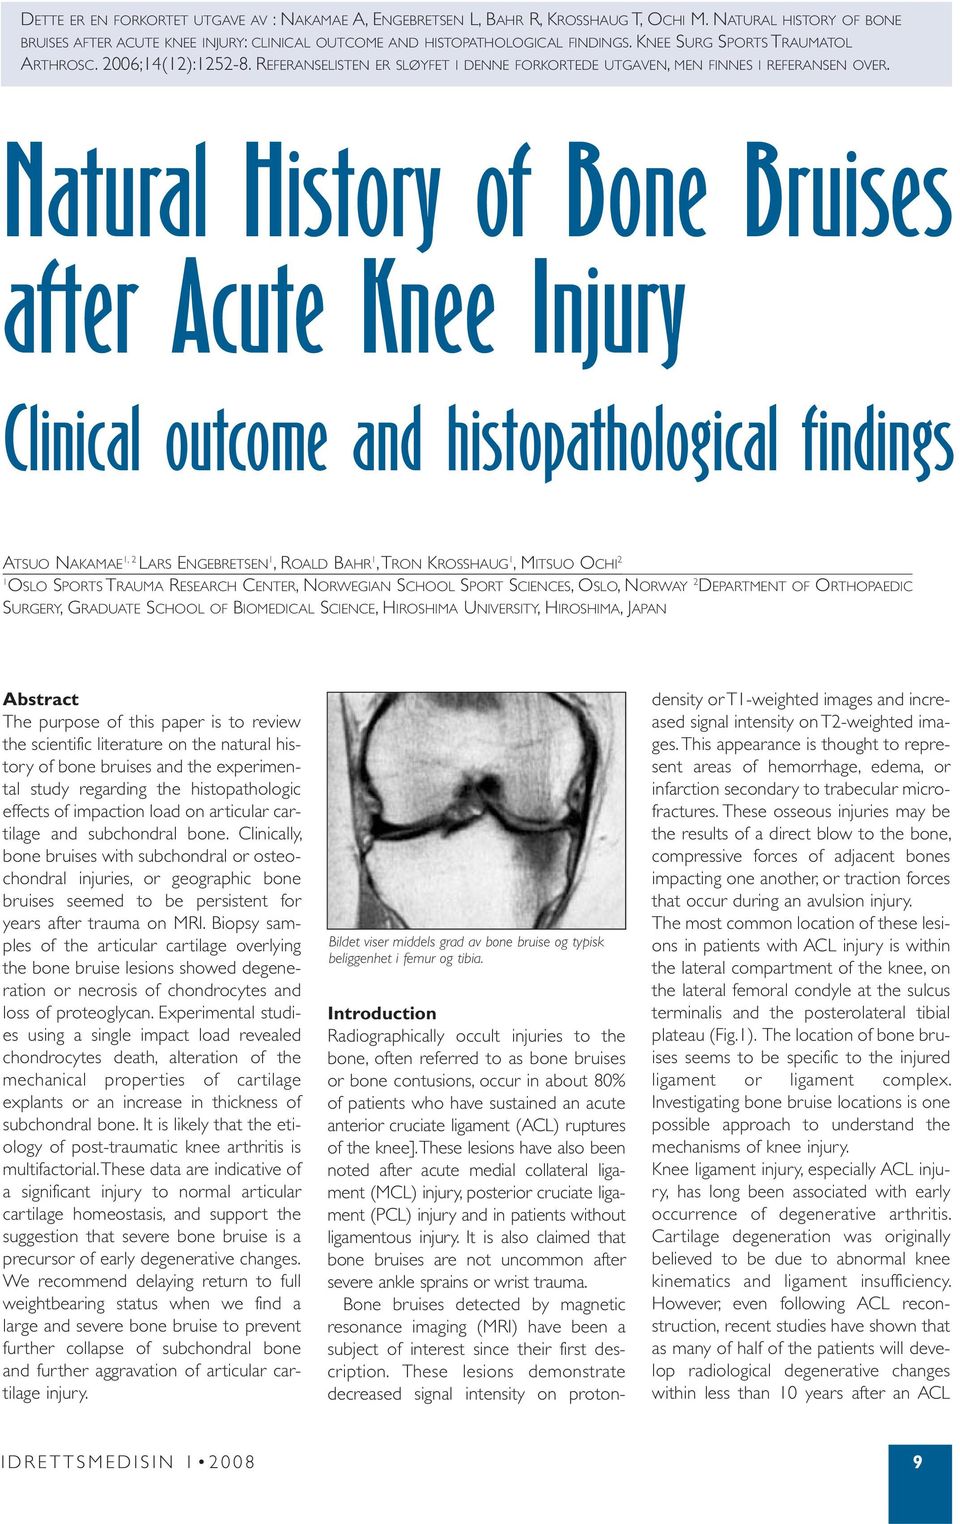 Natural History of Bone Bruises after Acute Knee Injury Clinical outcome and histopathological findings ATSUO NAKAMAE 1, 2 LARS ENGEBRETSEN 1, ROALD BAHR 1, TRON KROSSHAUG 1, MITSUO OCHI 2 1 OSLO